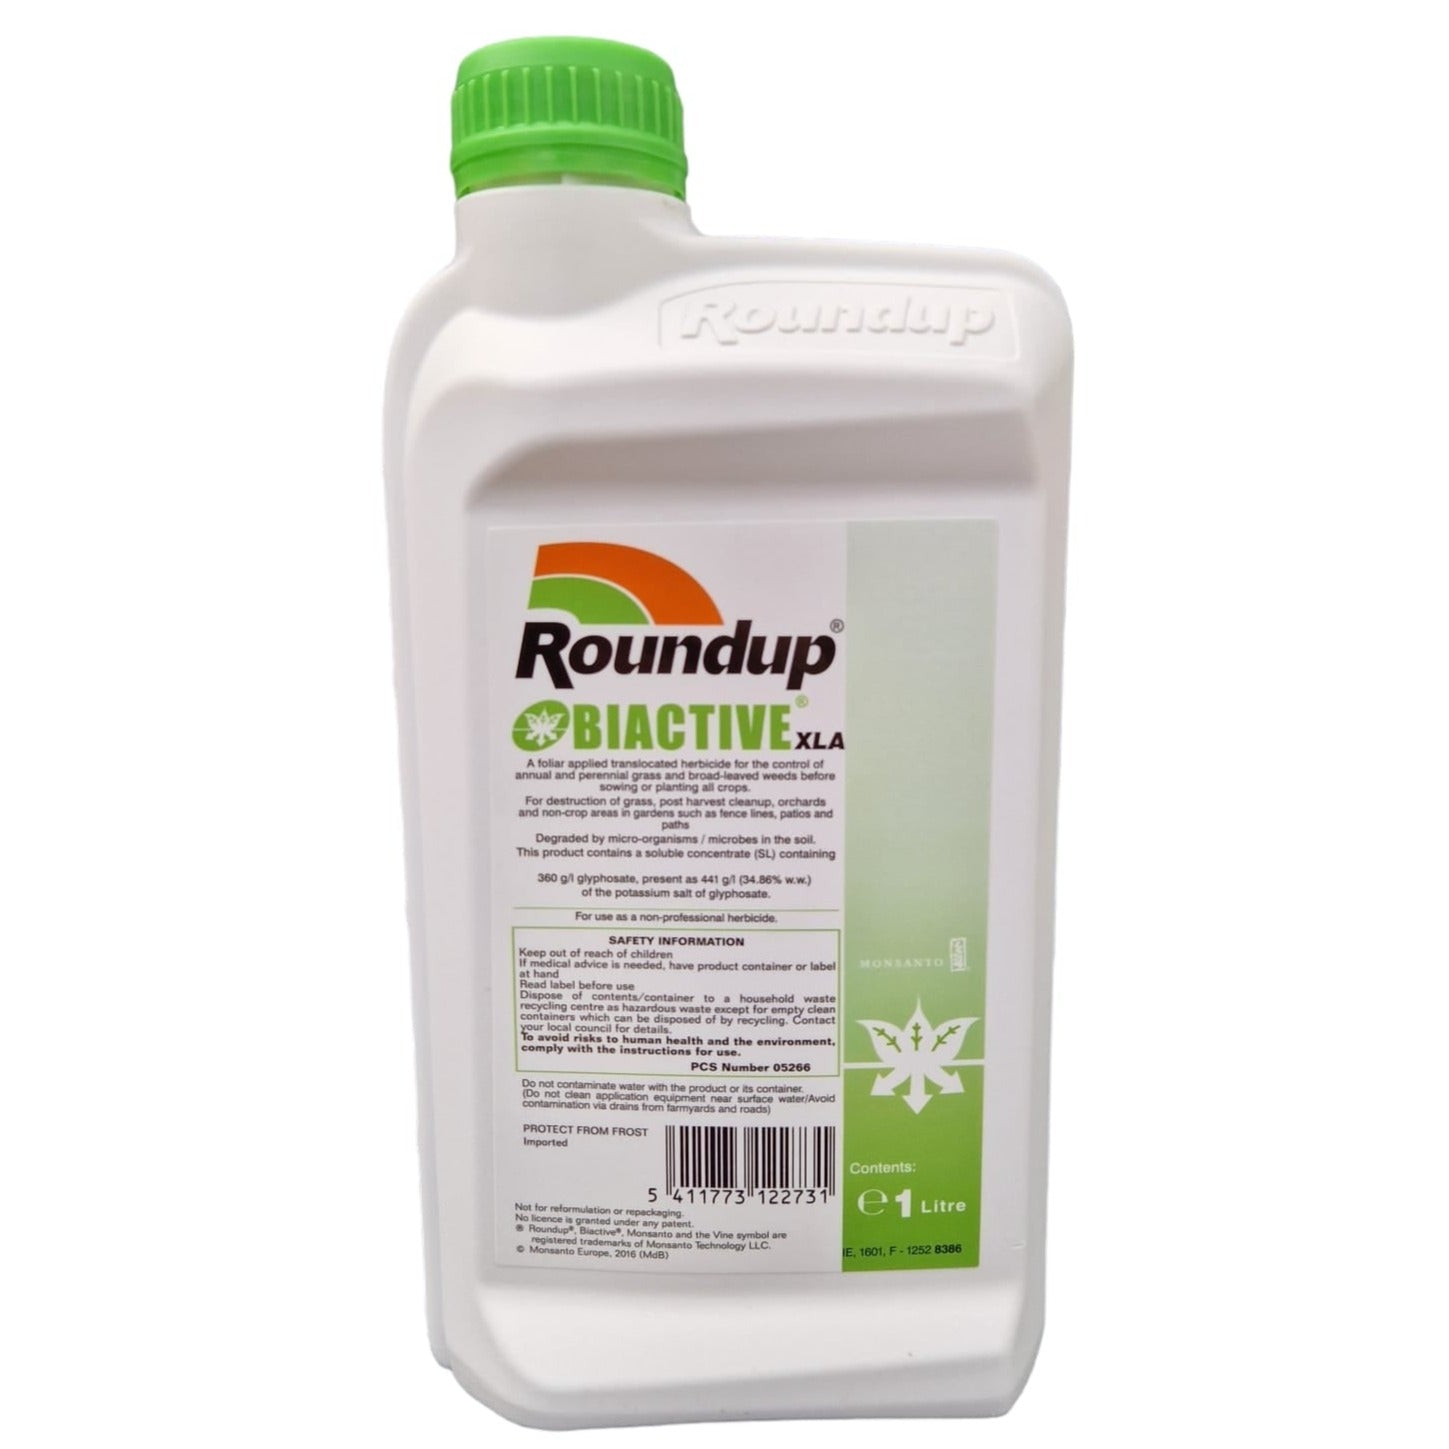 Roundup Bioactive XLA 1L